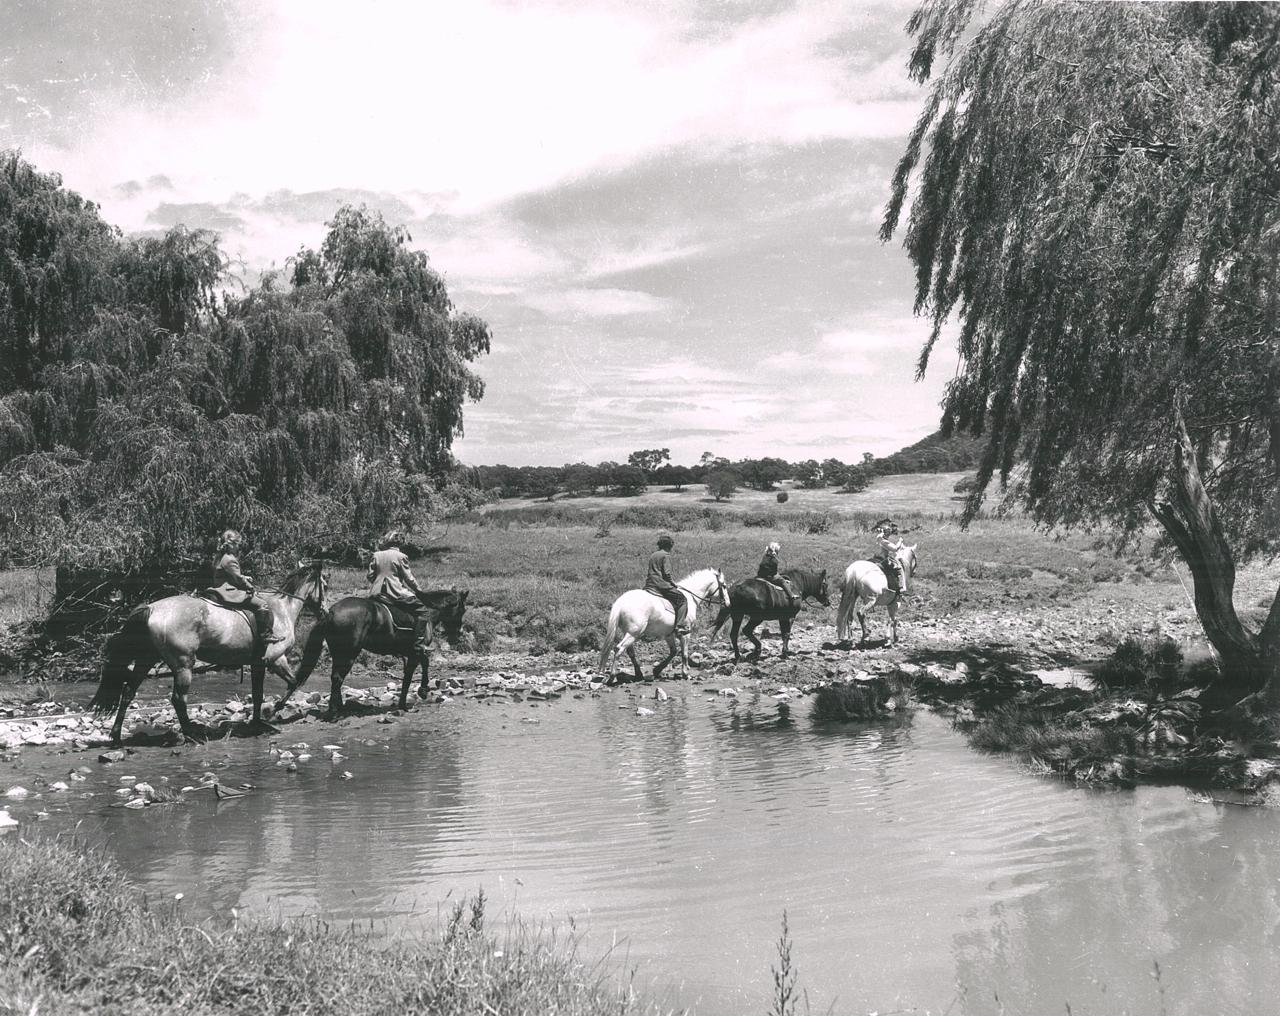 Five children riding across Sullivan's Creek